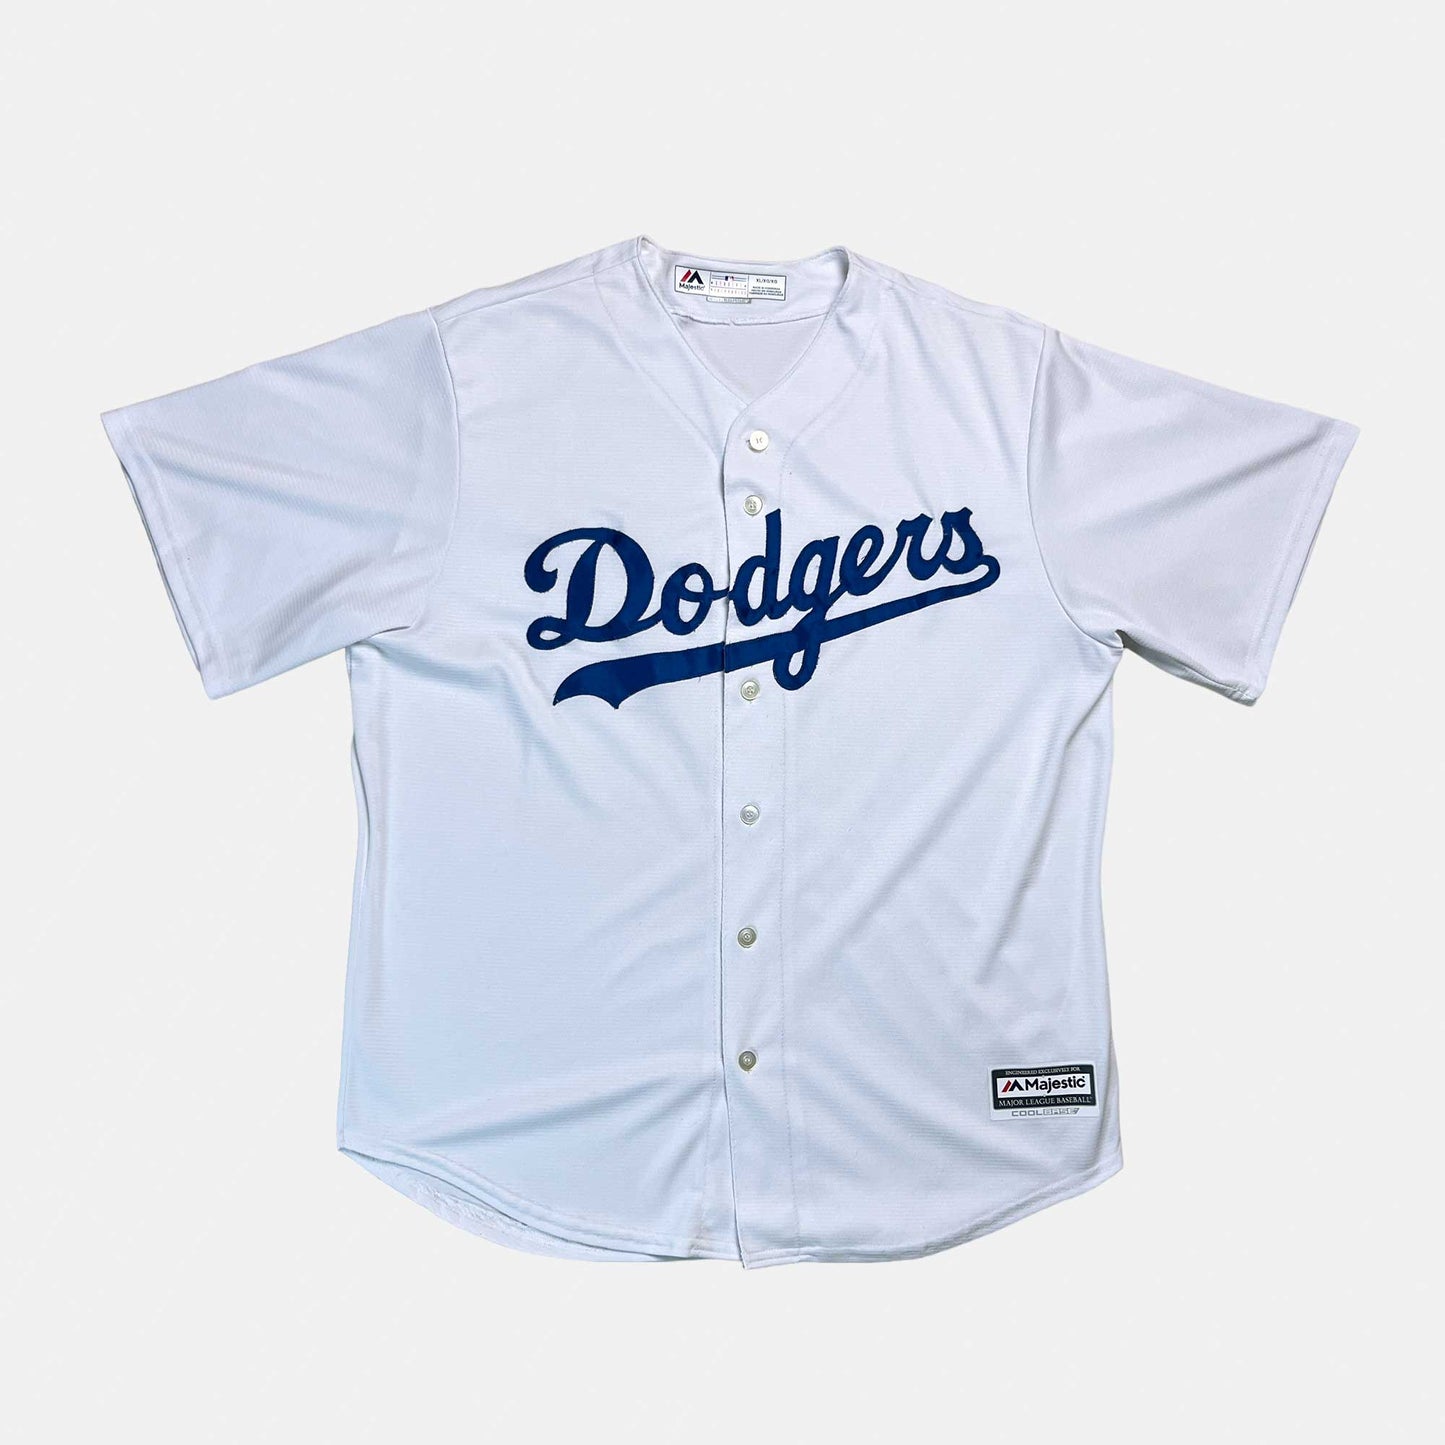 Los Angeles Dodgers - Größe XL - Majestic - MLB Trikot